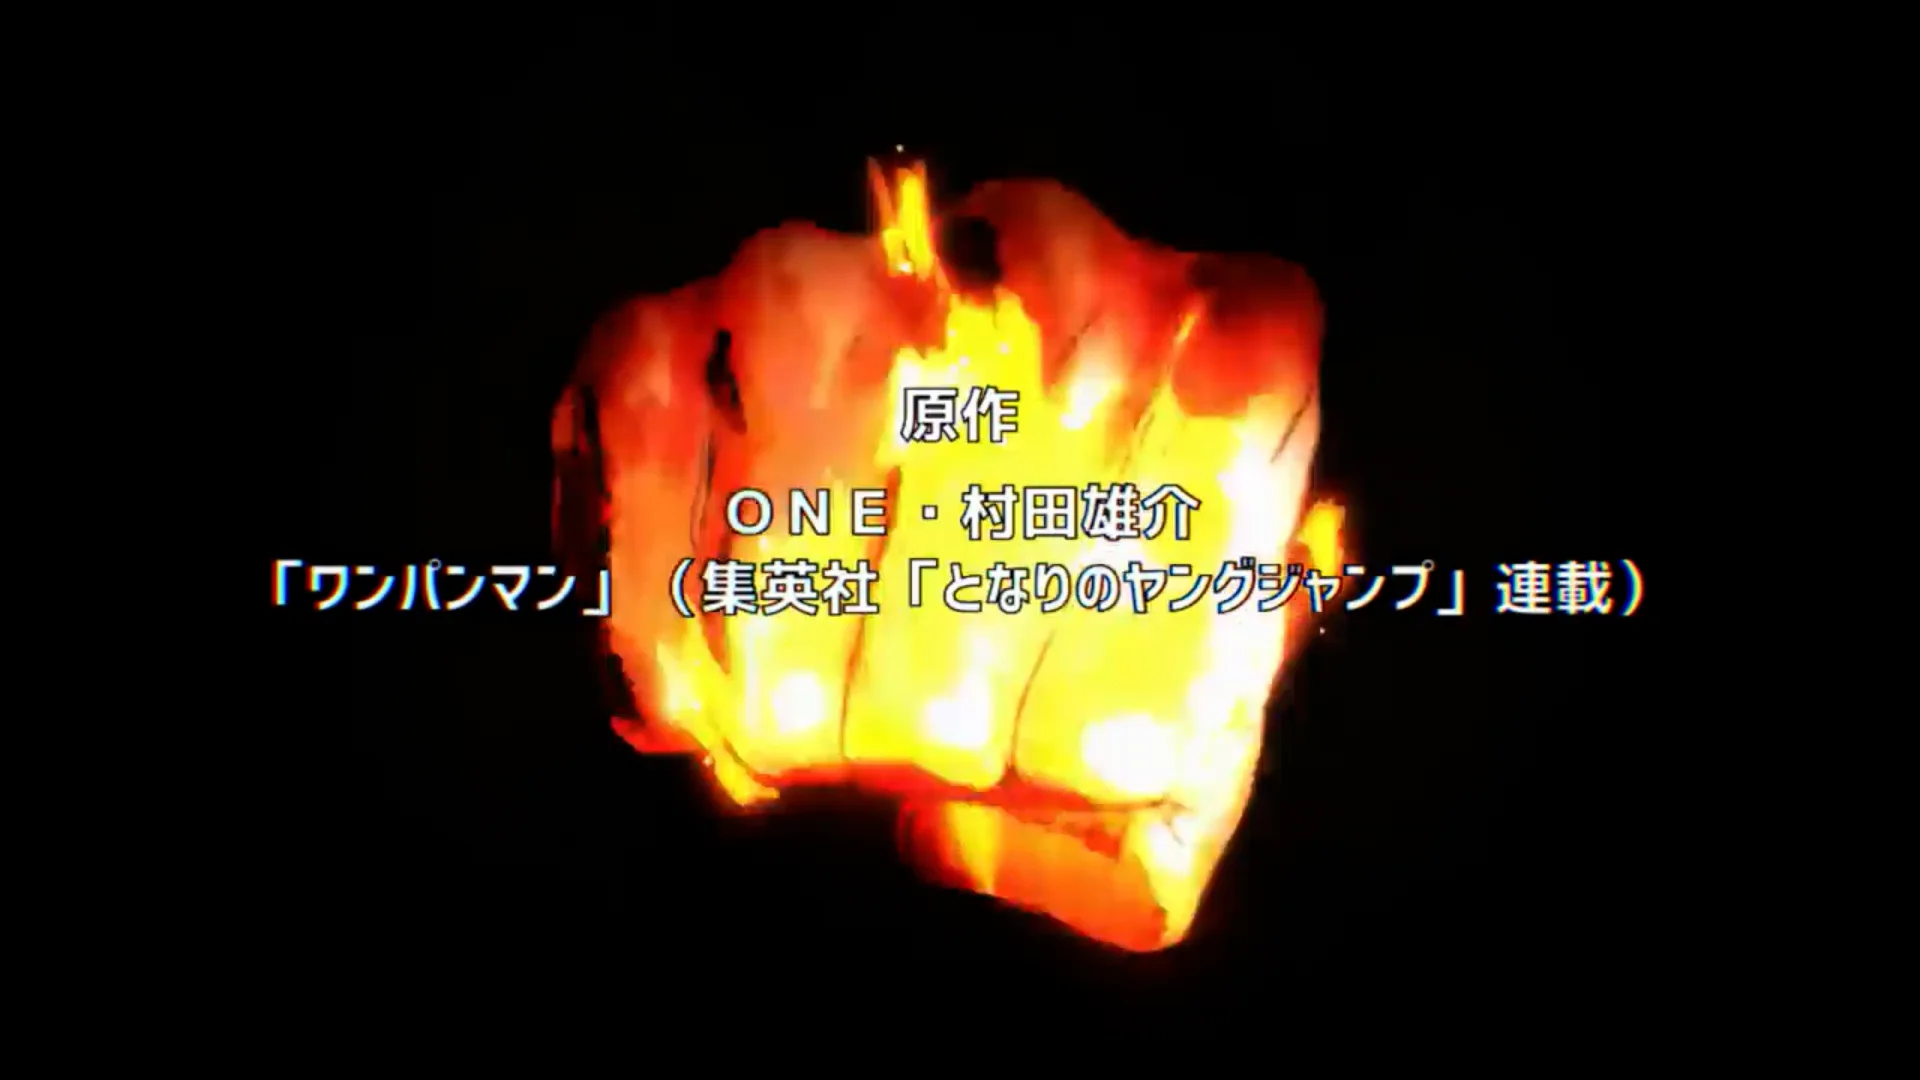 Hajime No Ippo - This Is War! - EPIC Anime Music, Anime Workout Music,  Anime Training Music on Vimeo